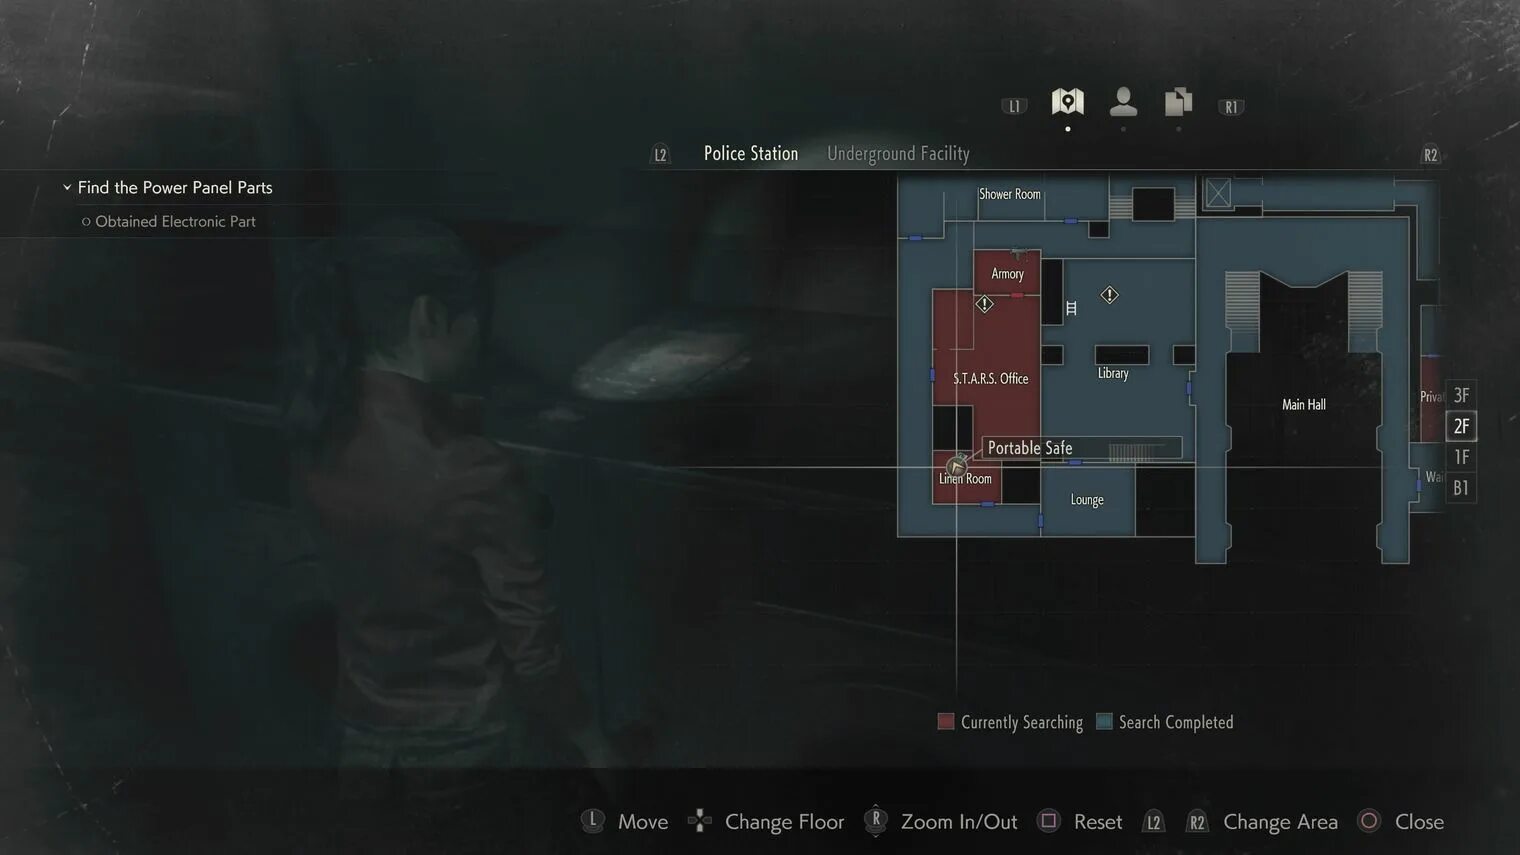 Resident Evil 2 Remake Клэр карта. Карта резидент ивел 2 ремейк. Операционная комната Resident Evil 2 Remake. Htpbltyn BDTK rfhnf 2 ремейк.